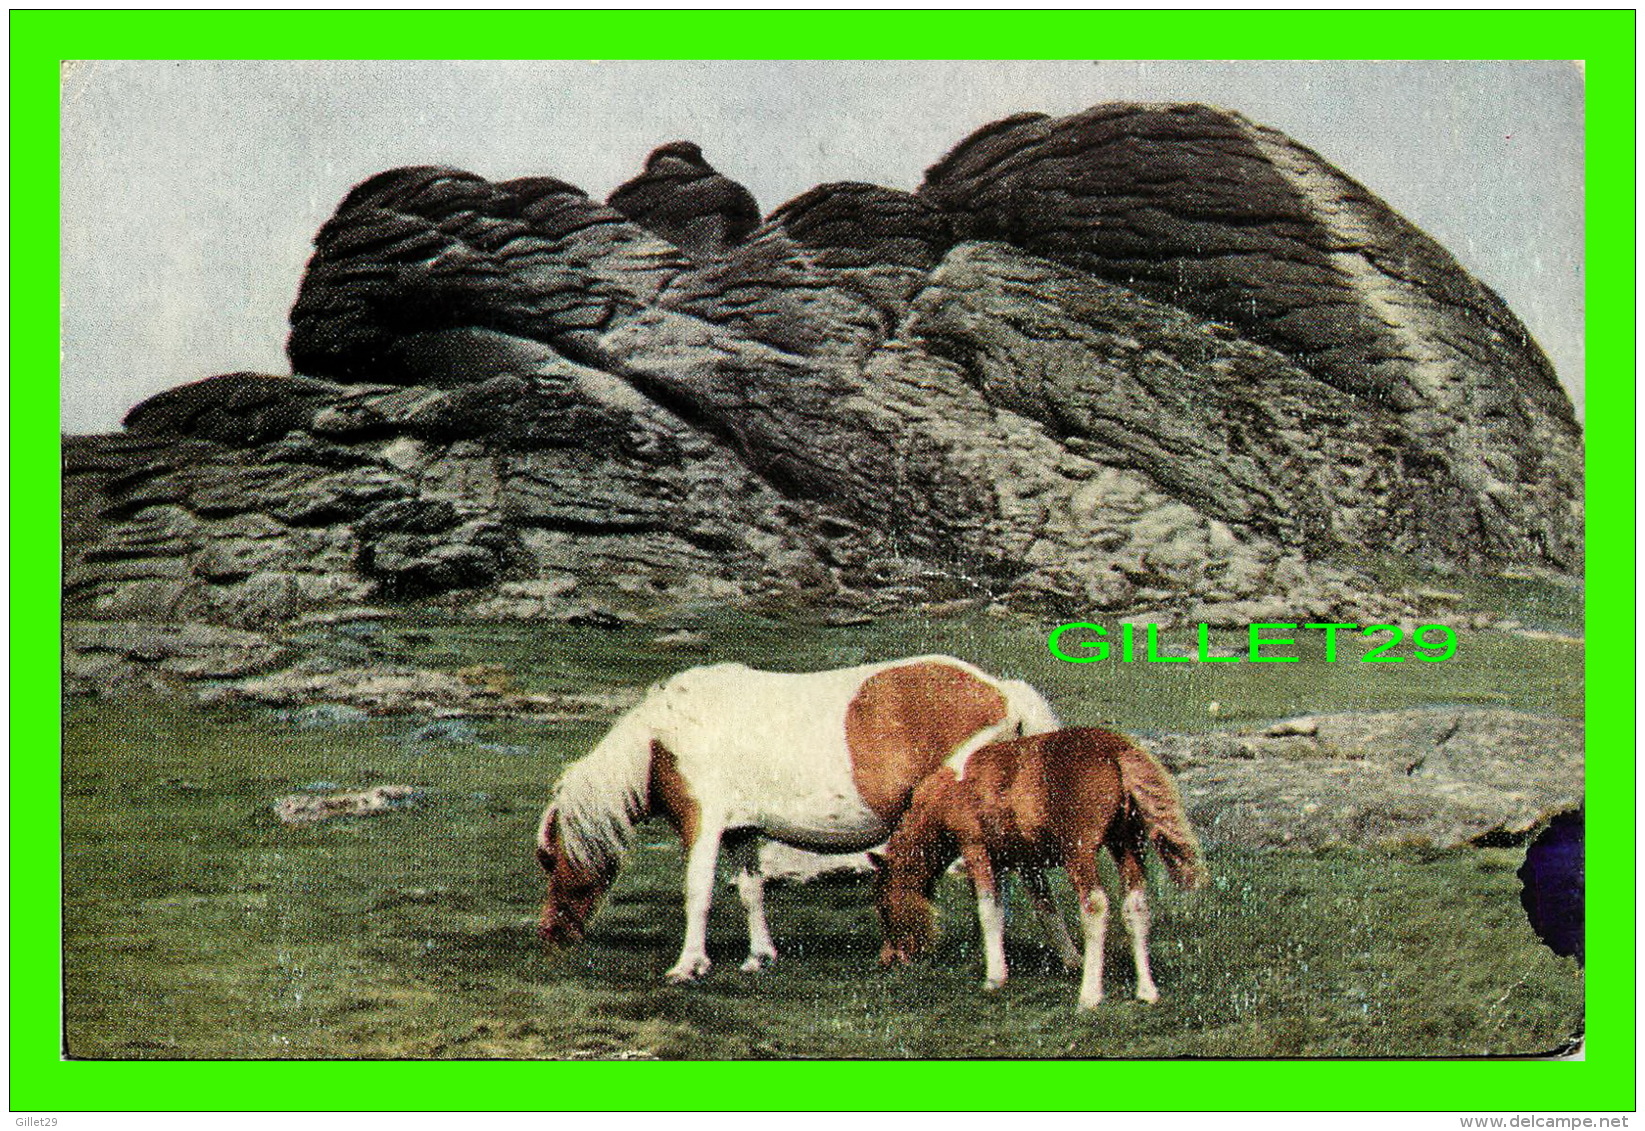 CHEVAUX - HORSES - PUB. BY JEROME DESSAIN - TYRAVEL IN 1962 - HAYTOR - - Chevaux